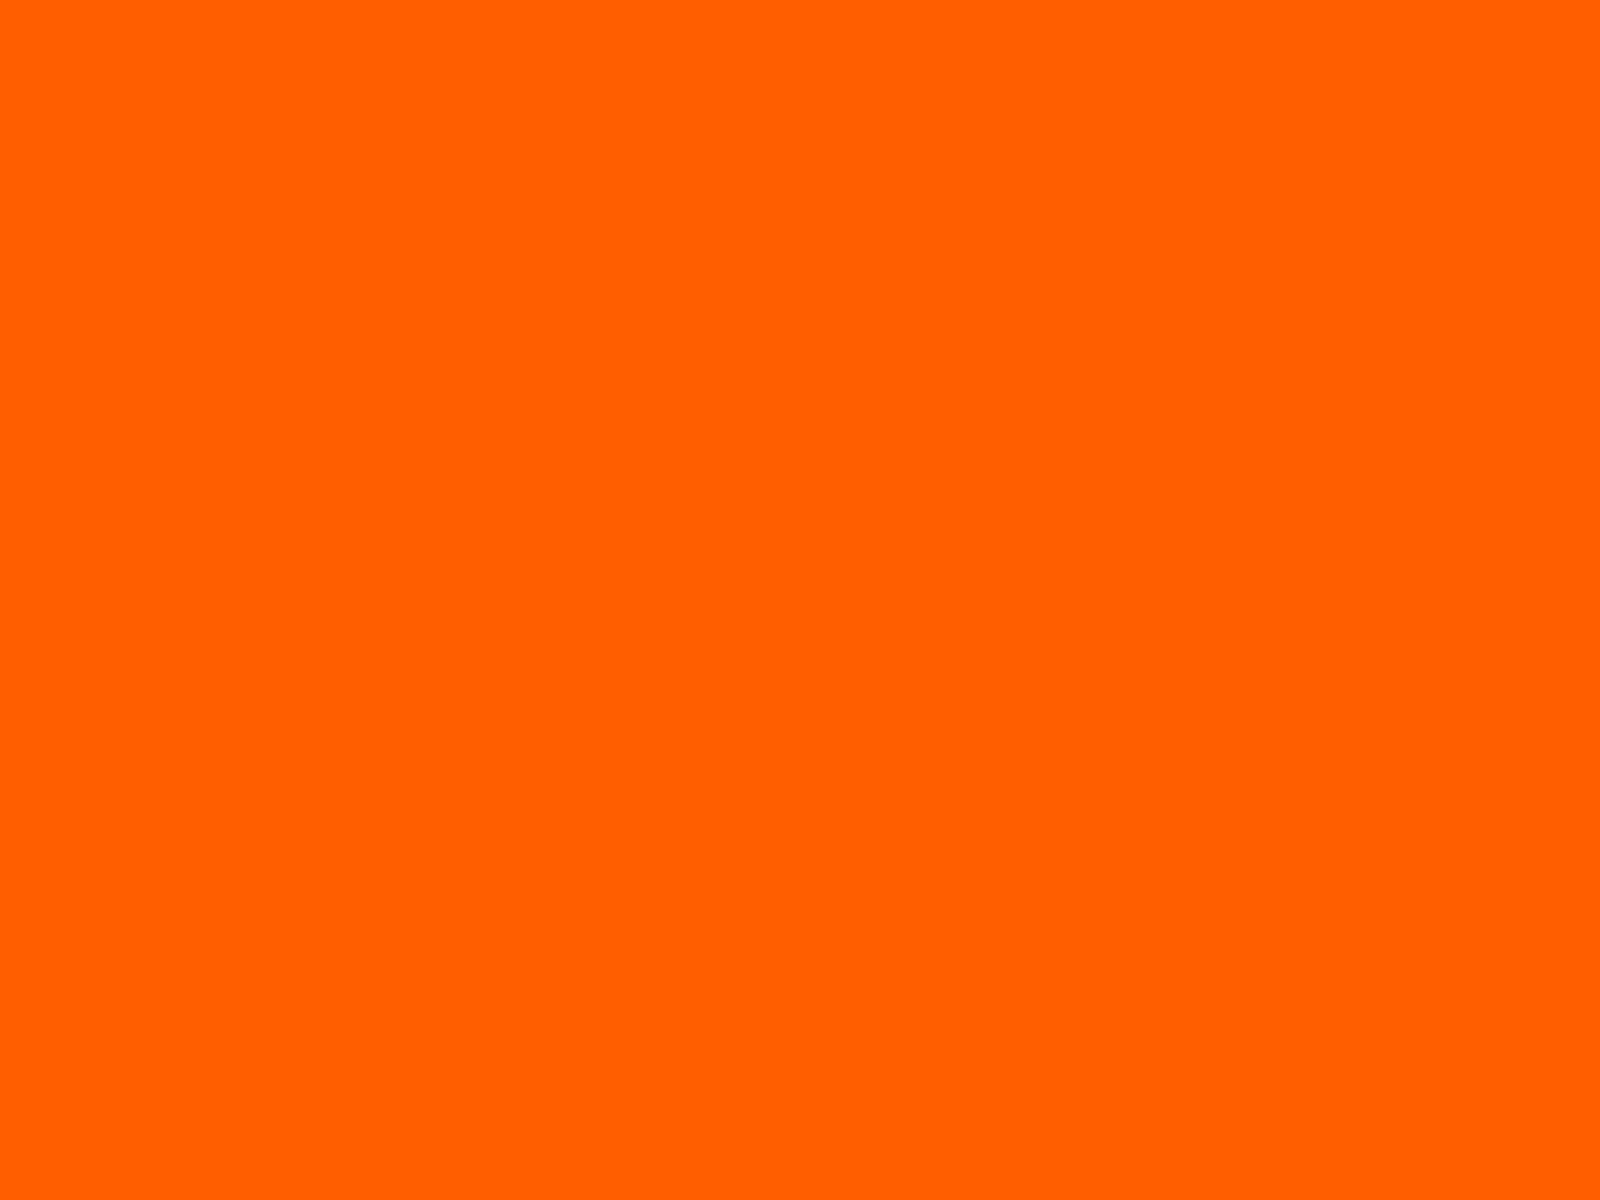 Un orange vif